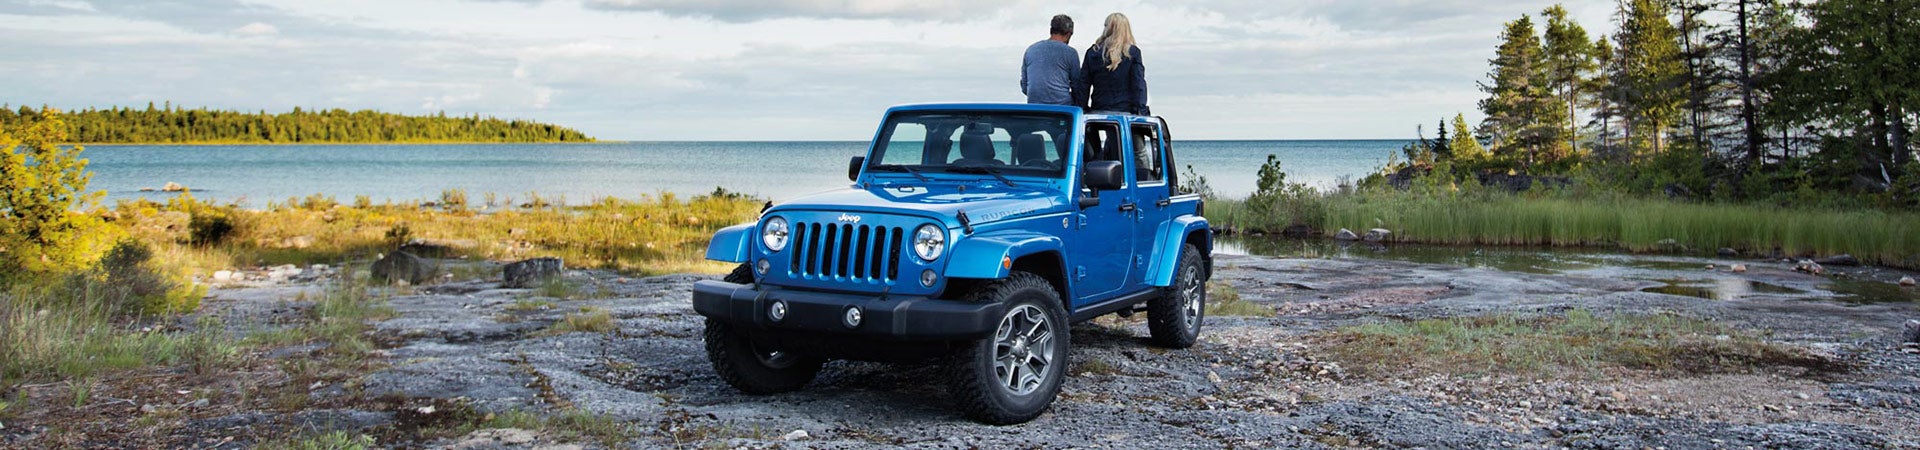 New Jeeps For Sale At Bluebonnet Jeep | Jeep Dealer